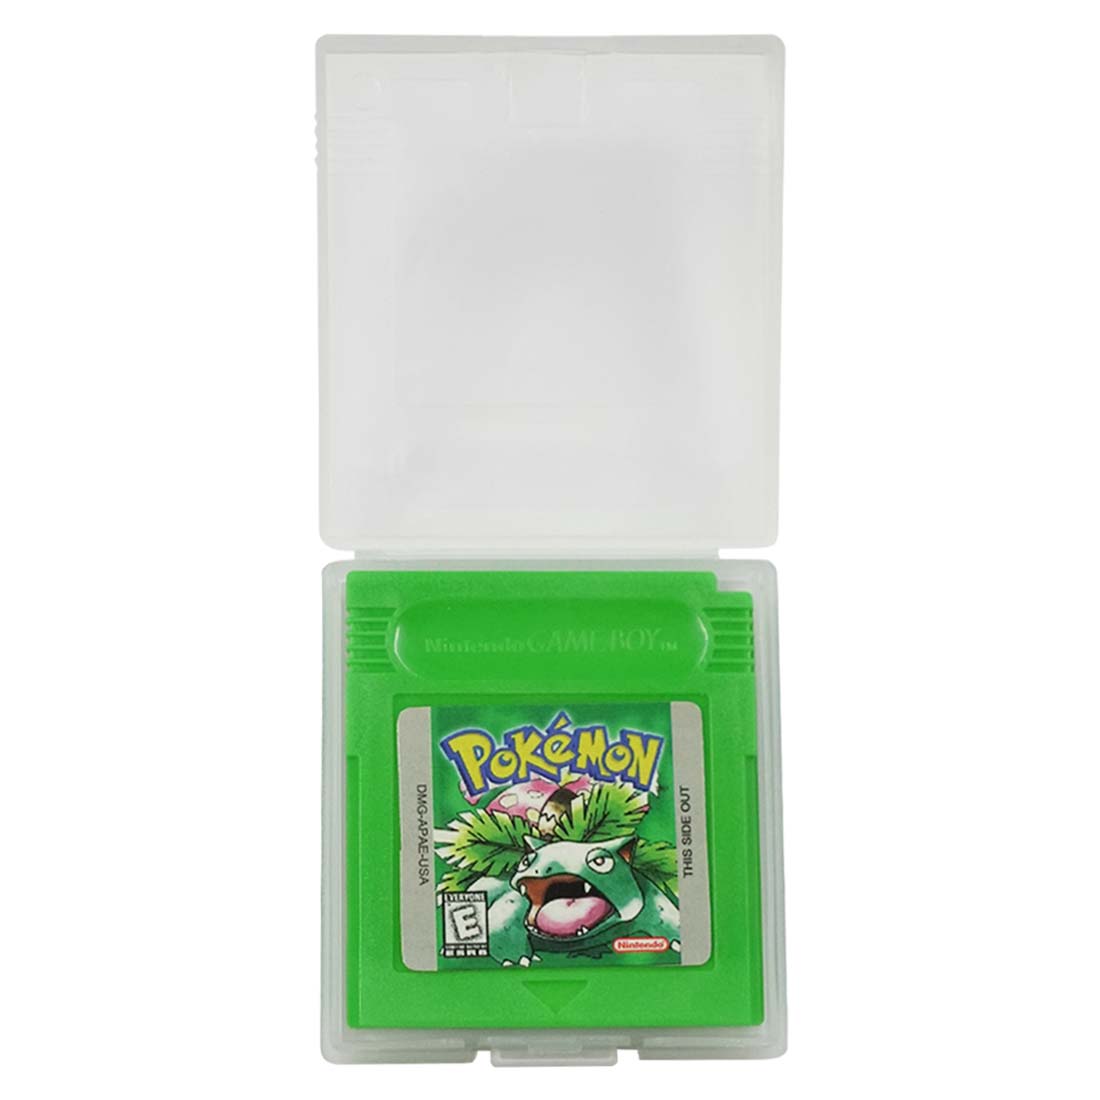 (Pre-Owned) Pokemon Gotta Catch 'em All: Green Version - Gameboy Classic - لعبة - Store 974 | ستور ٩٧٤